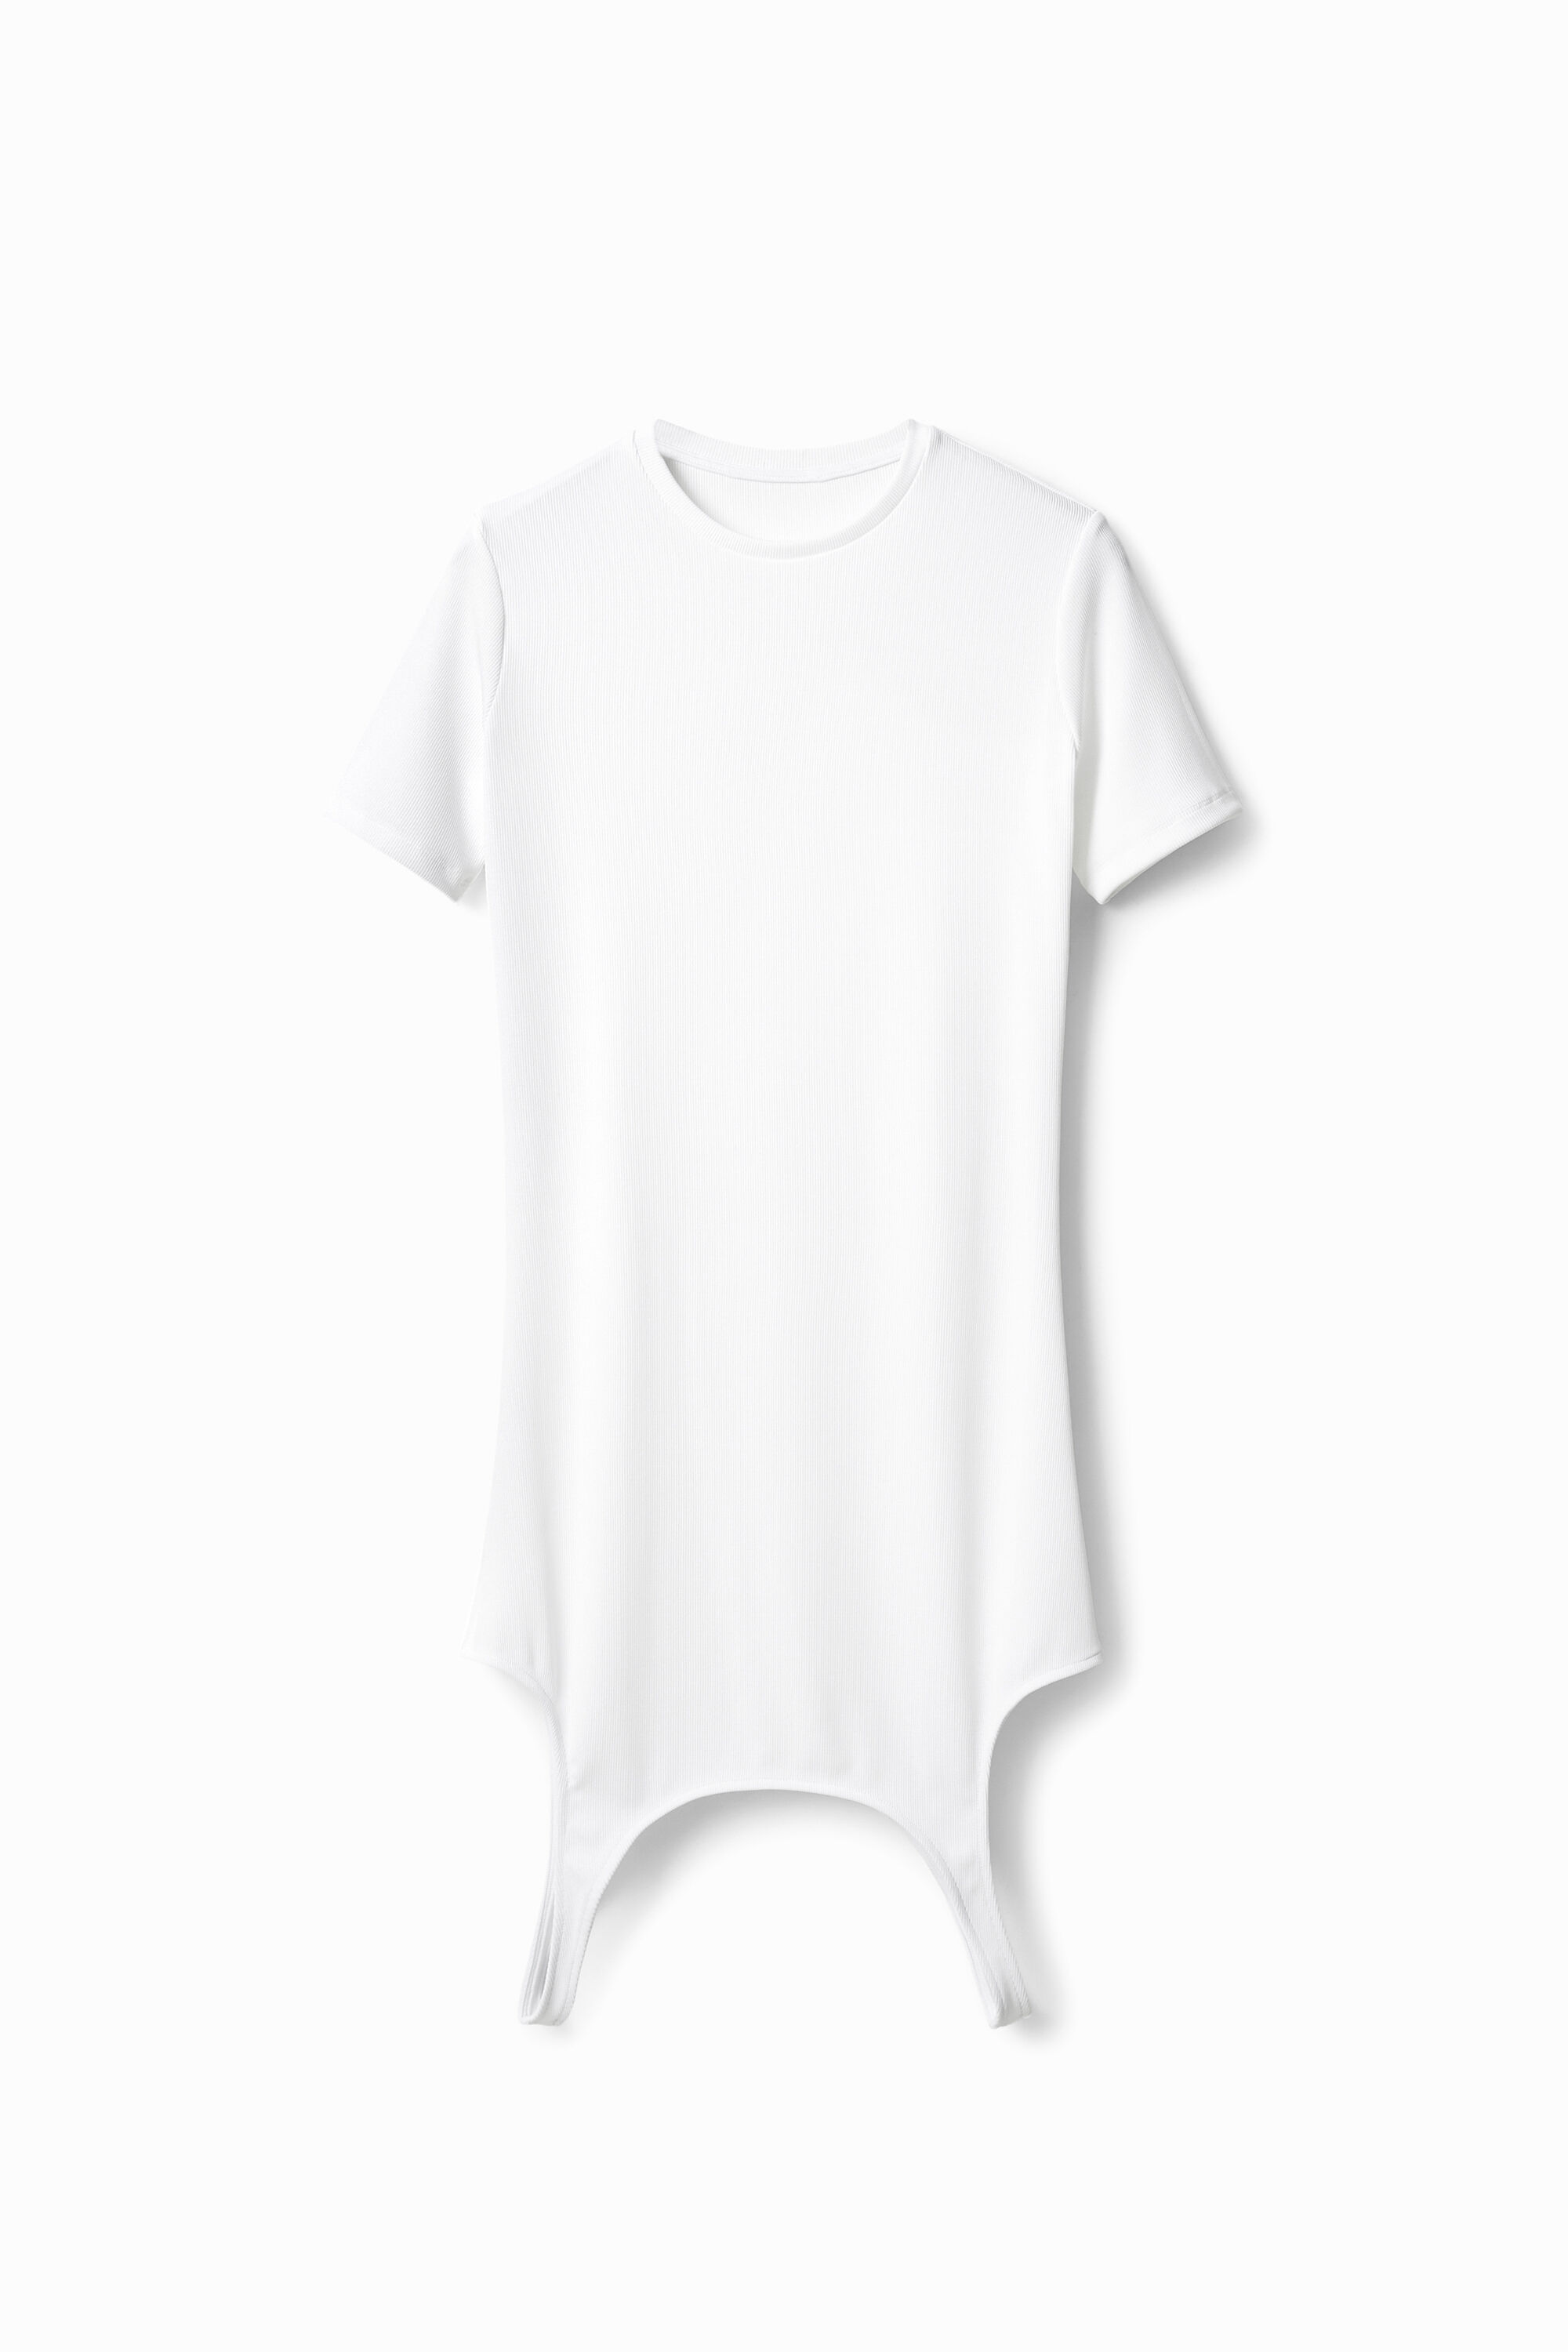 Maitrepierre multiposition T-shirt dress - WHITE - M